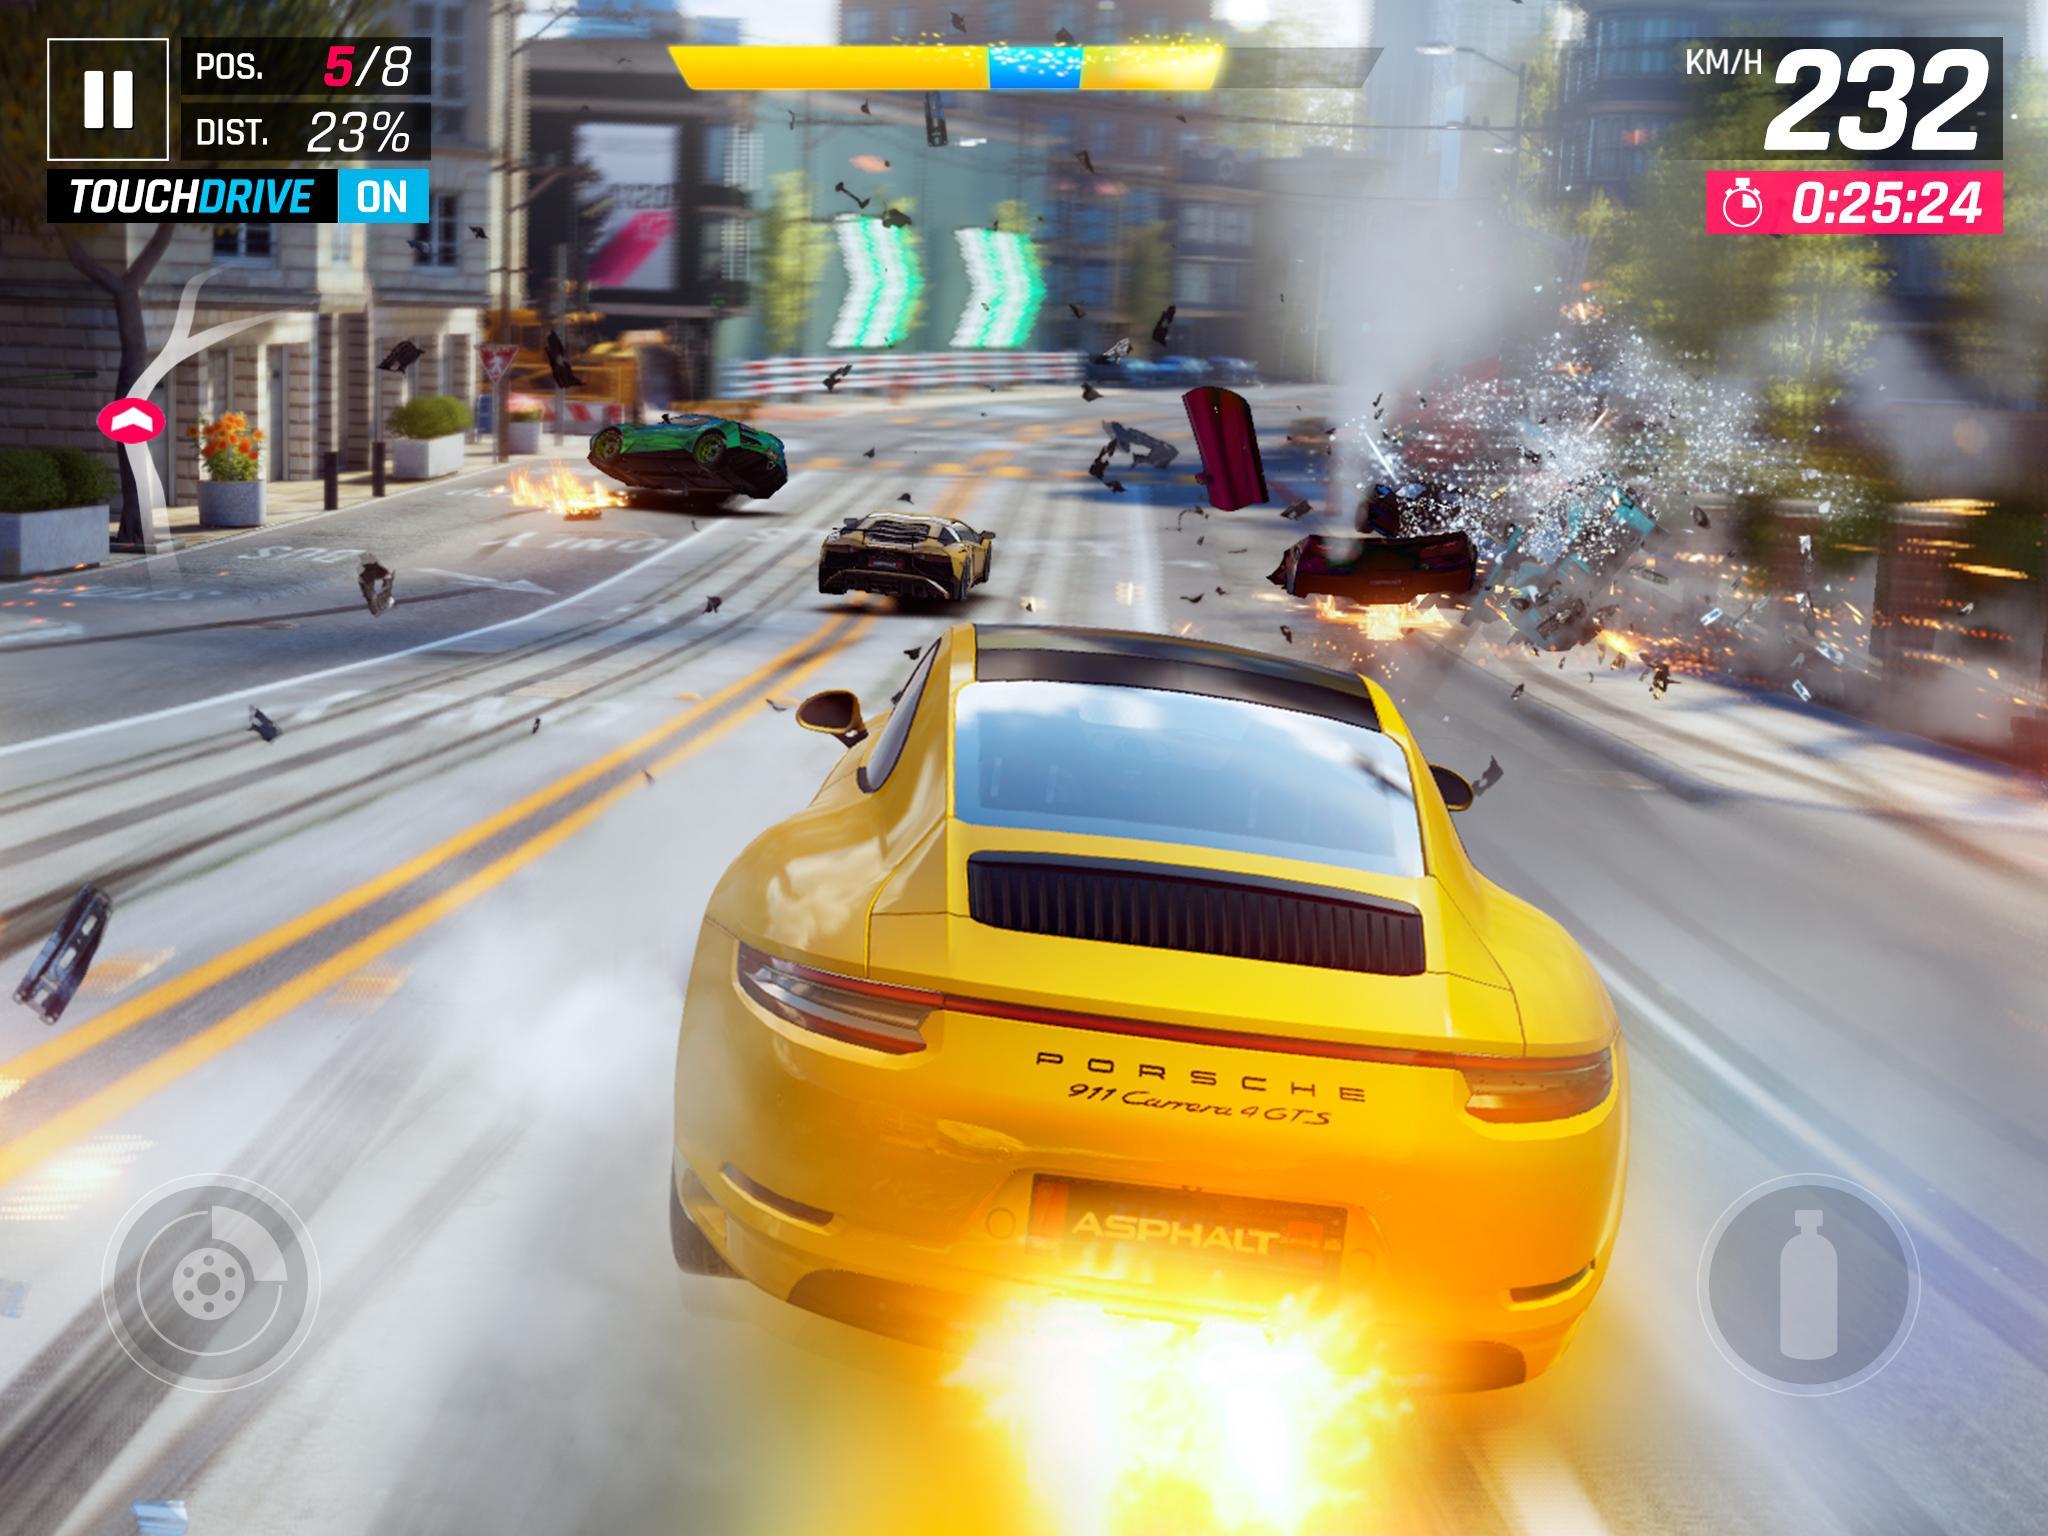 Asphalt 9 Legends - Epic Car Action Racing Game 2.5.3a Screenshot 20